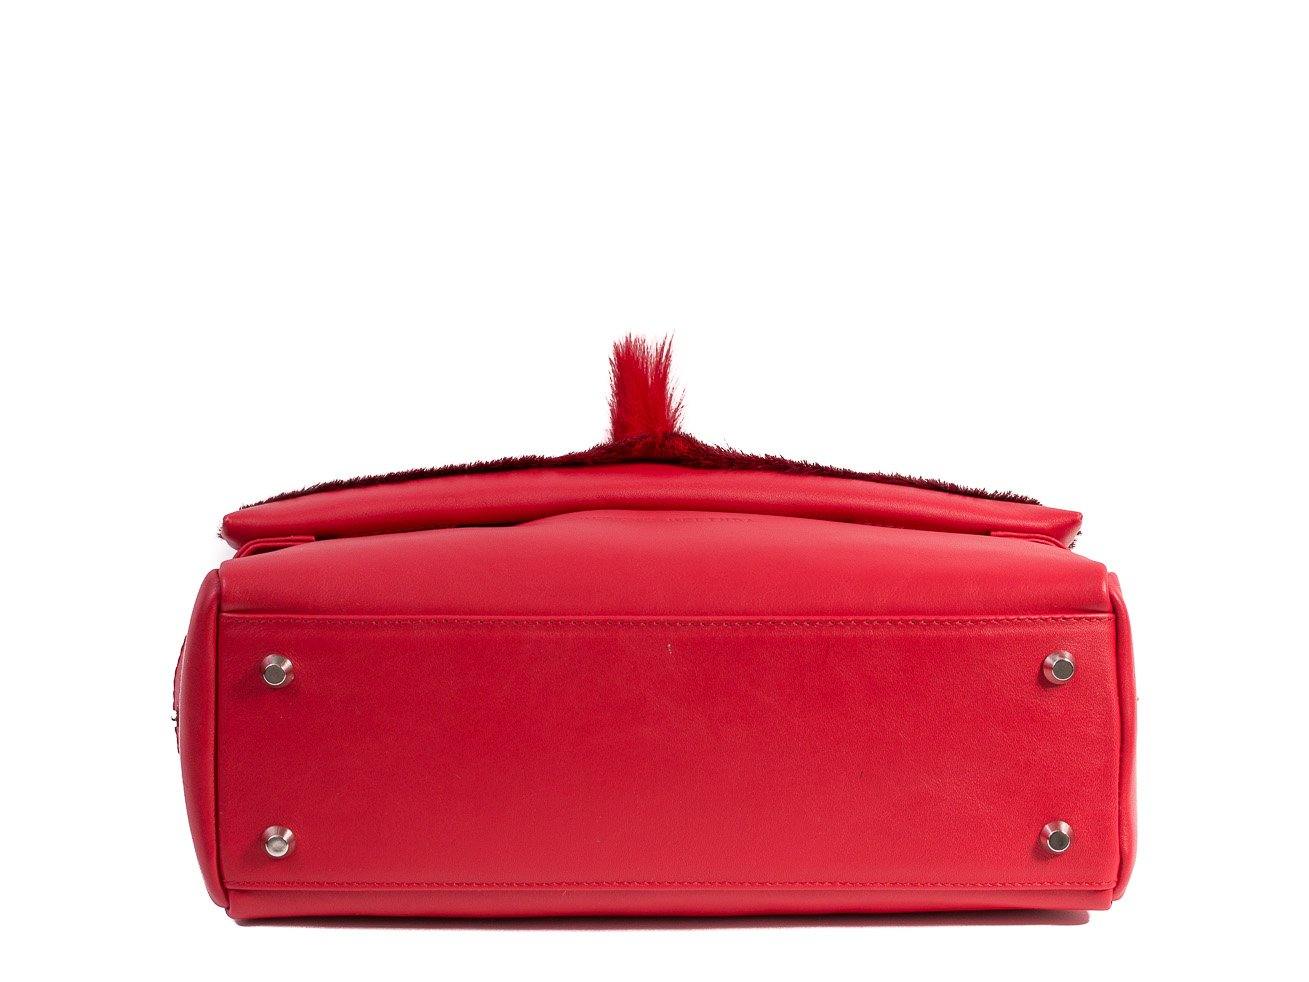 sherene melinda springbok hair-on-hide red leather smith tote bag Fan bottom